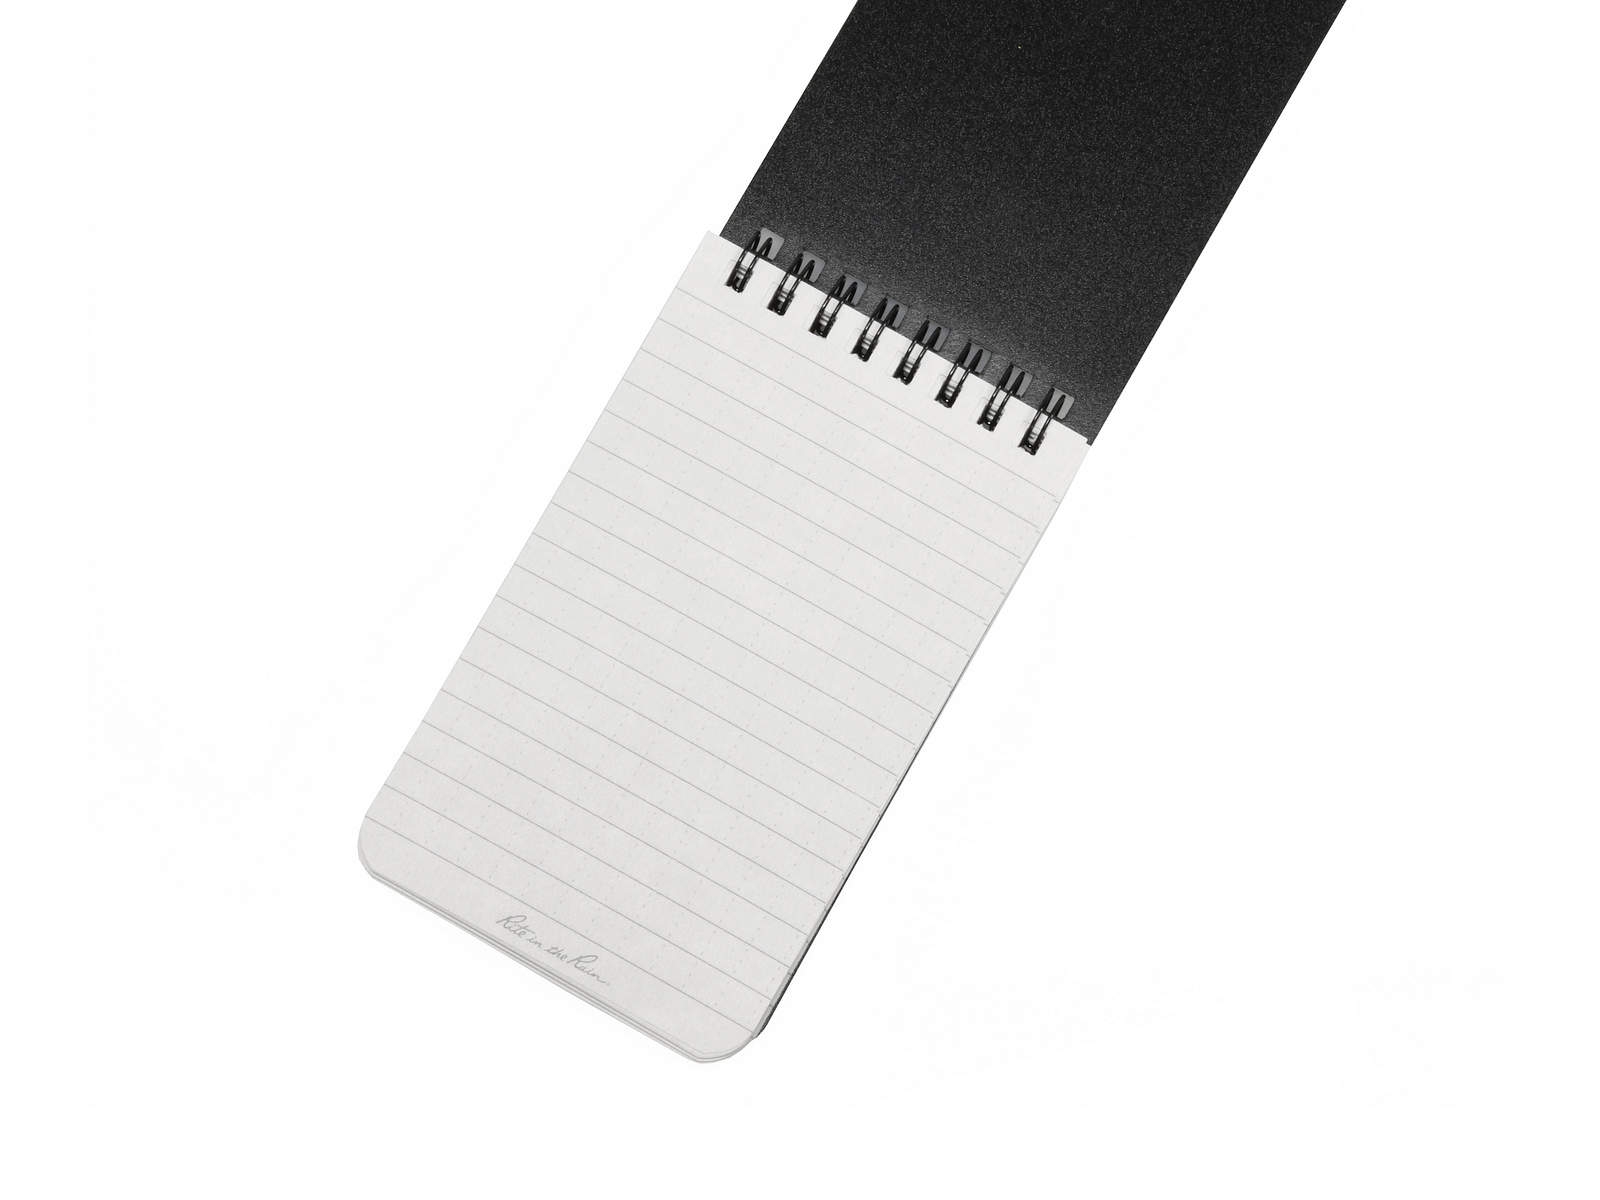 GLOCK NotePad GlockPerfection (ポケットノート/Size 12.5 x 7.5 cm)